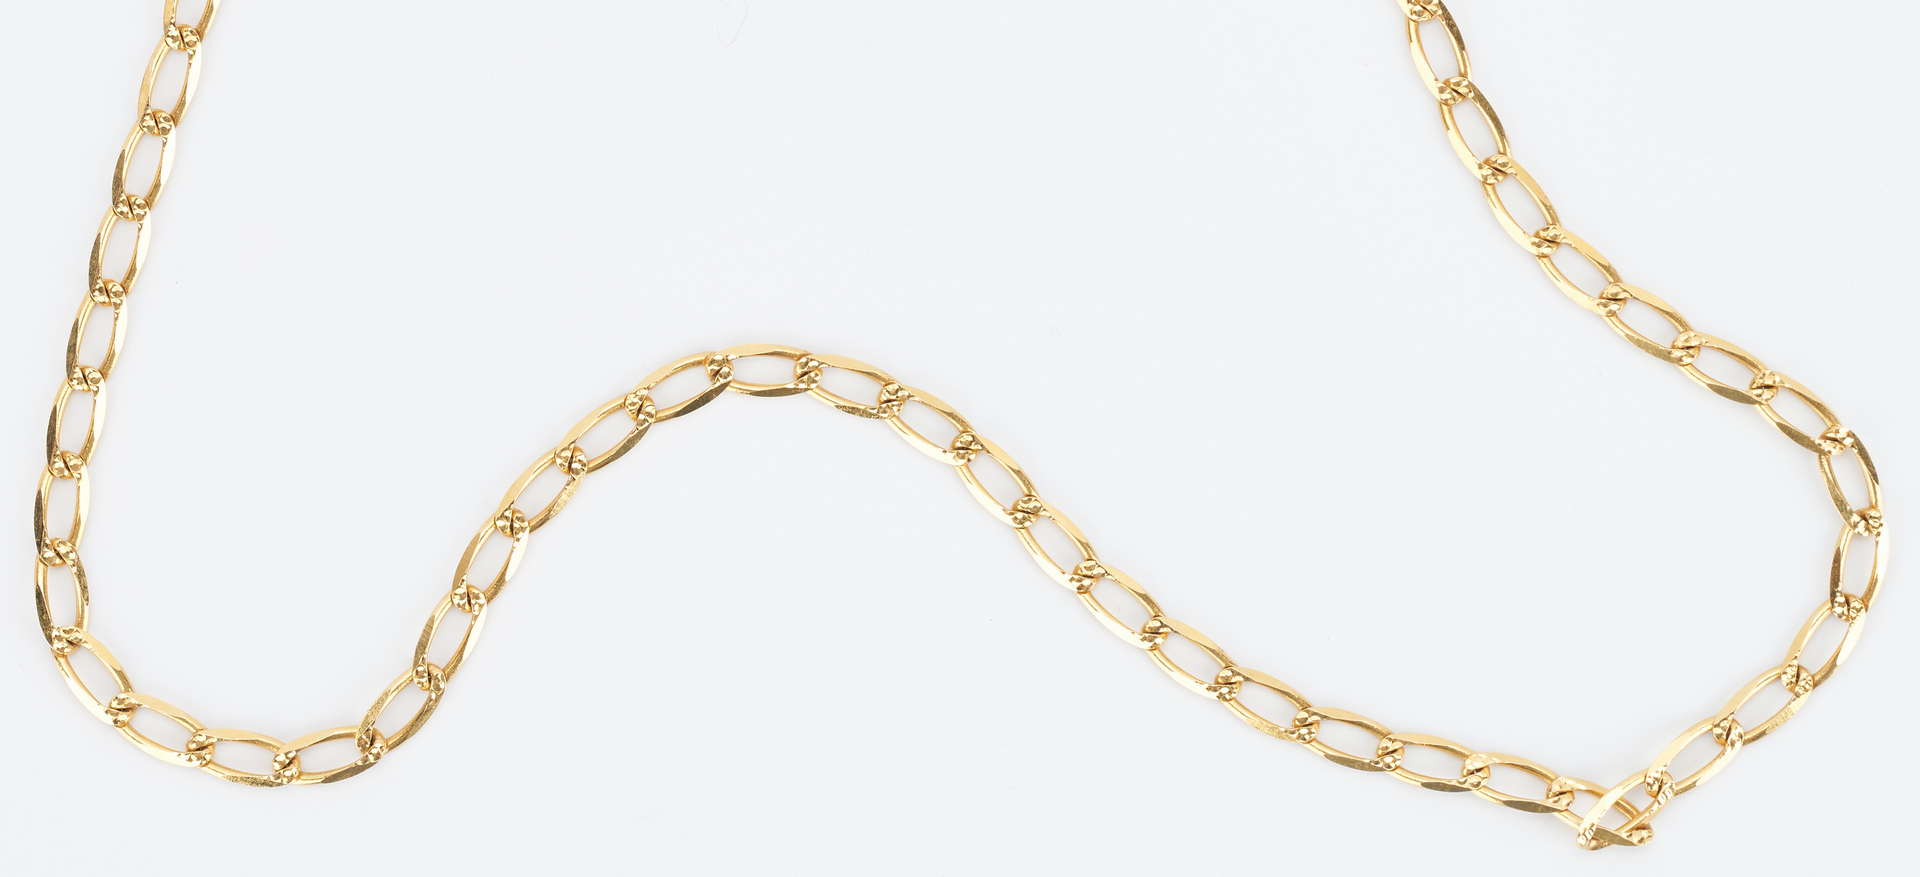 Lot 491: 4 14K Gold Chain Necklaces